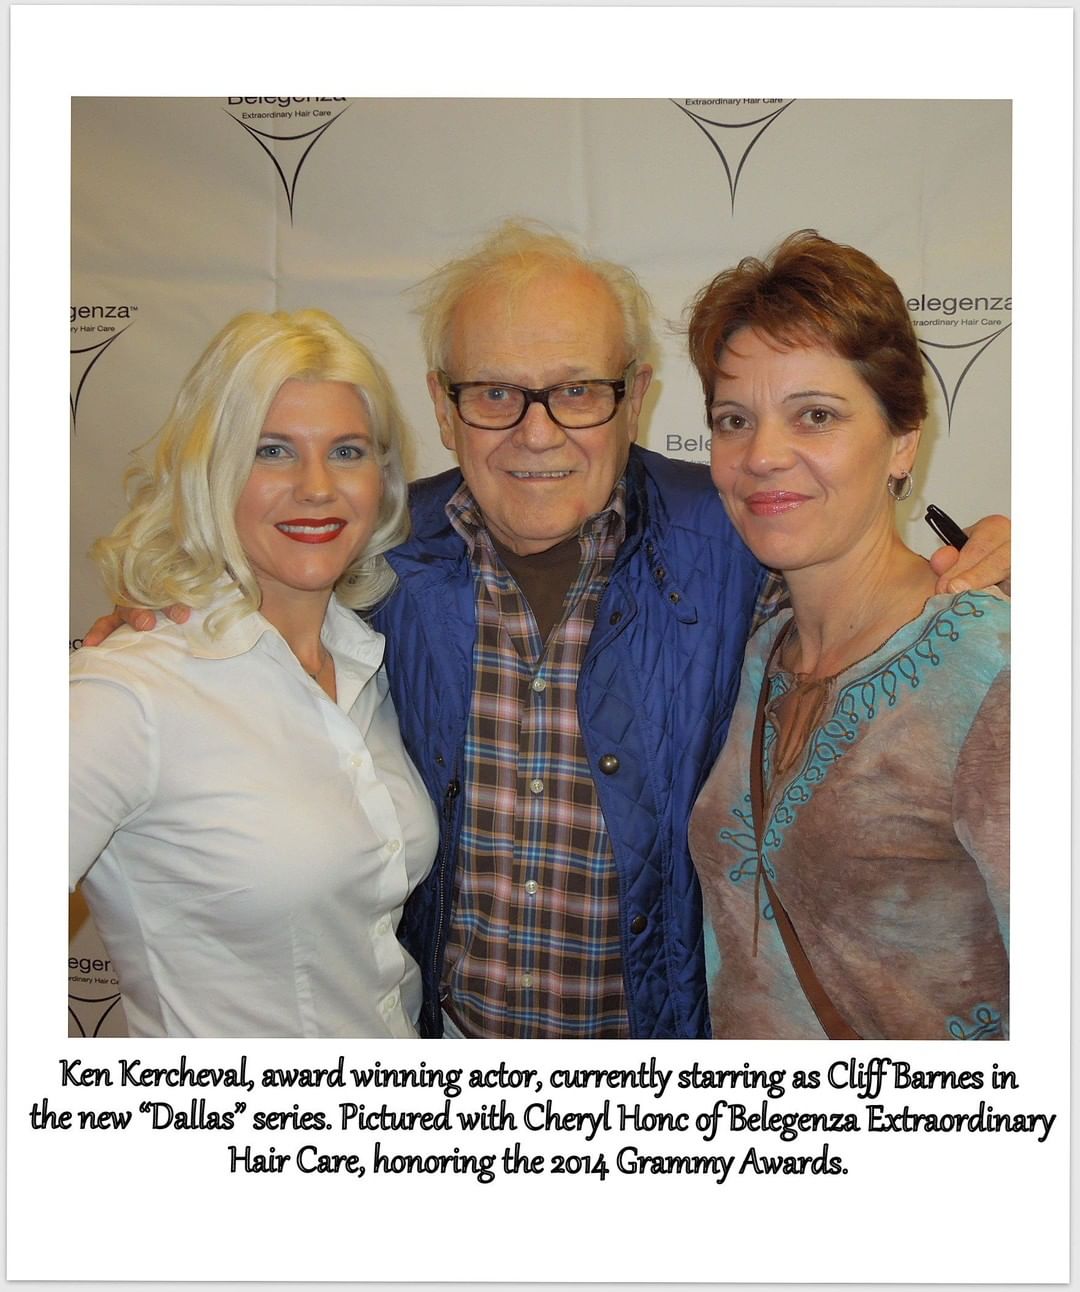 Ken Kercheval, acteur primé, sur la photo avec Cheryl Honc de Beleganza Extraordinary Hair Care, durant les Grammy Awards de 2014. | Webstagram/@belegenza